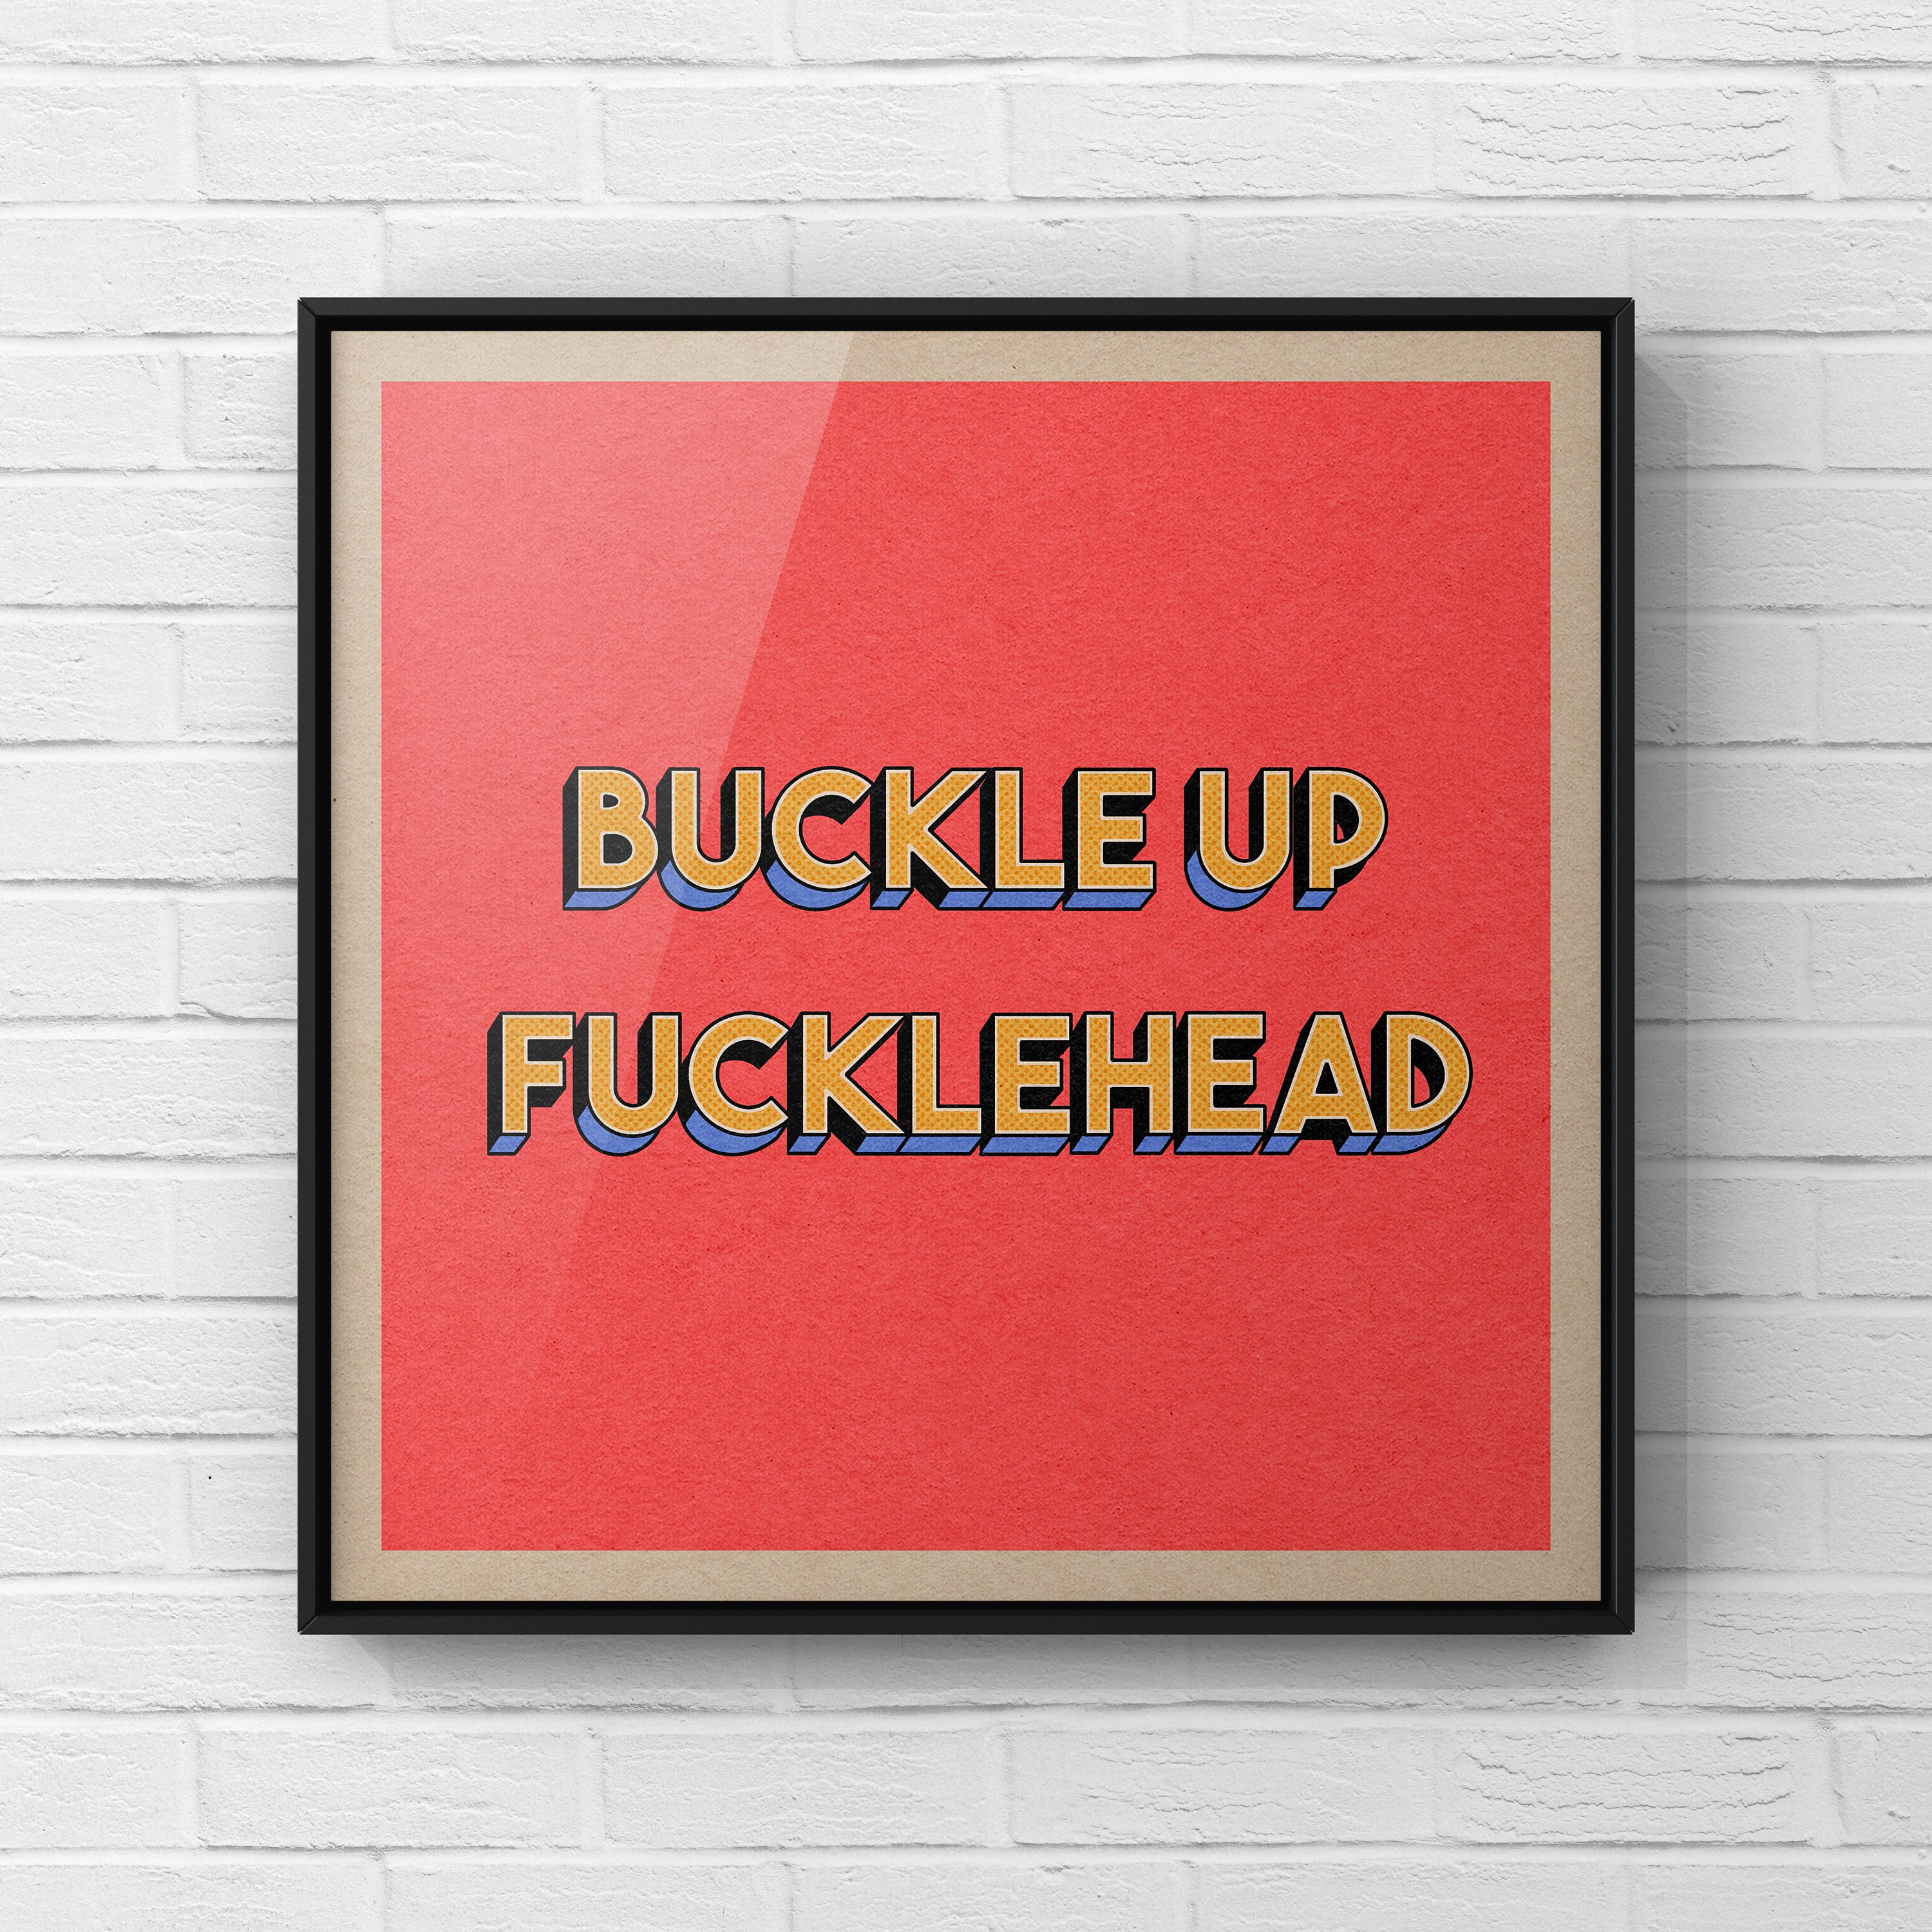 Succession 'buckle Up, Fucklehead' Mug 